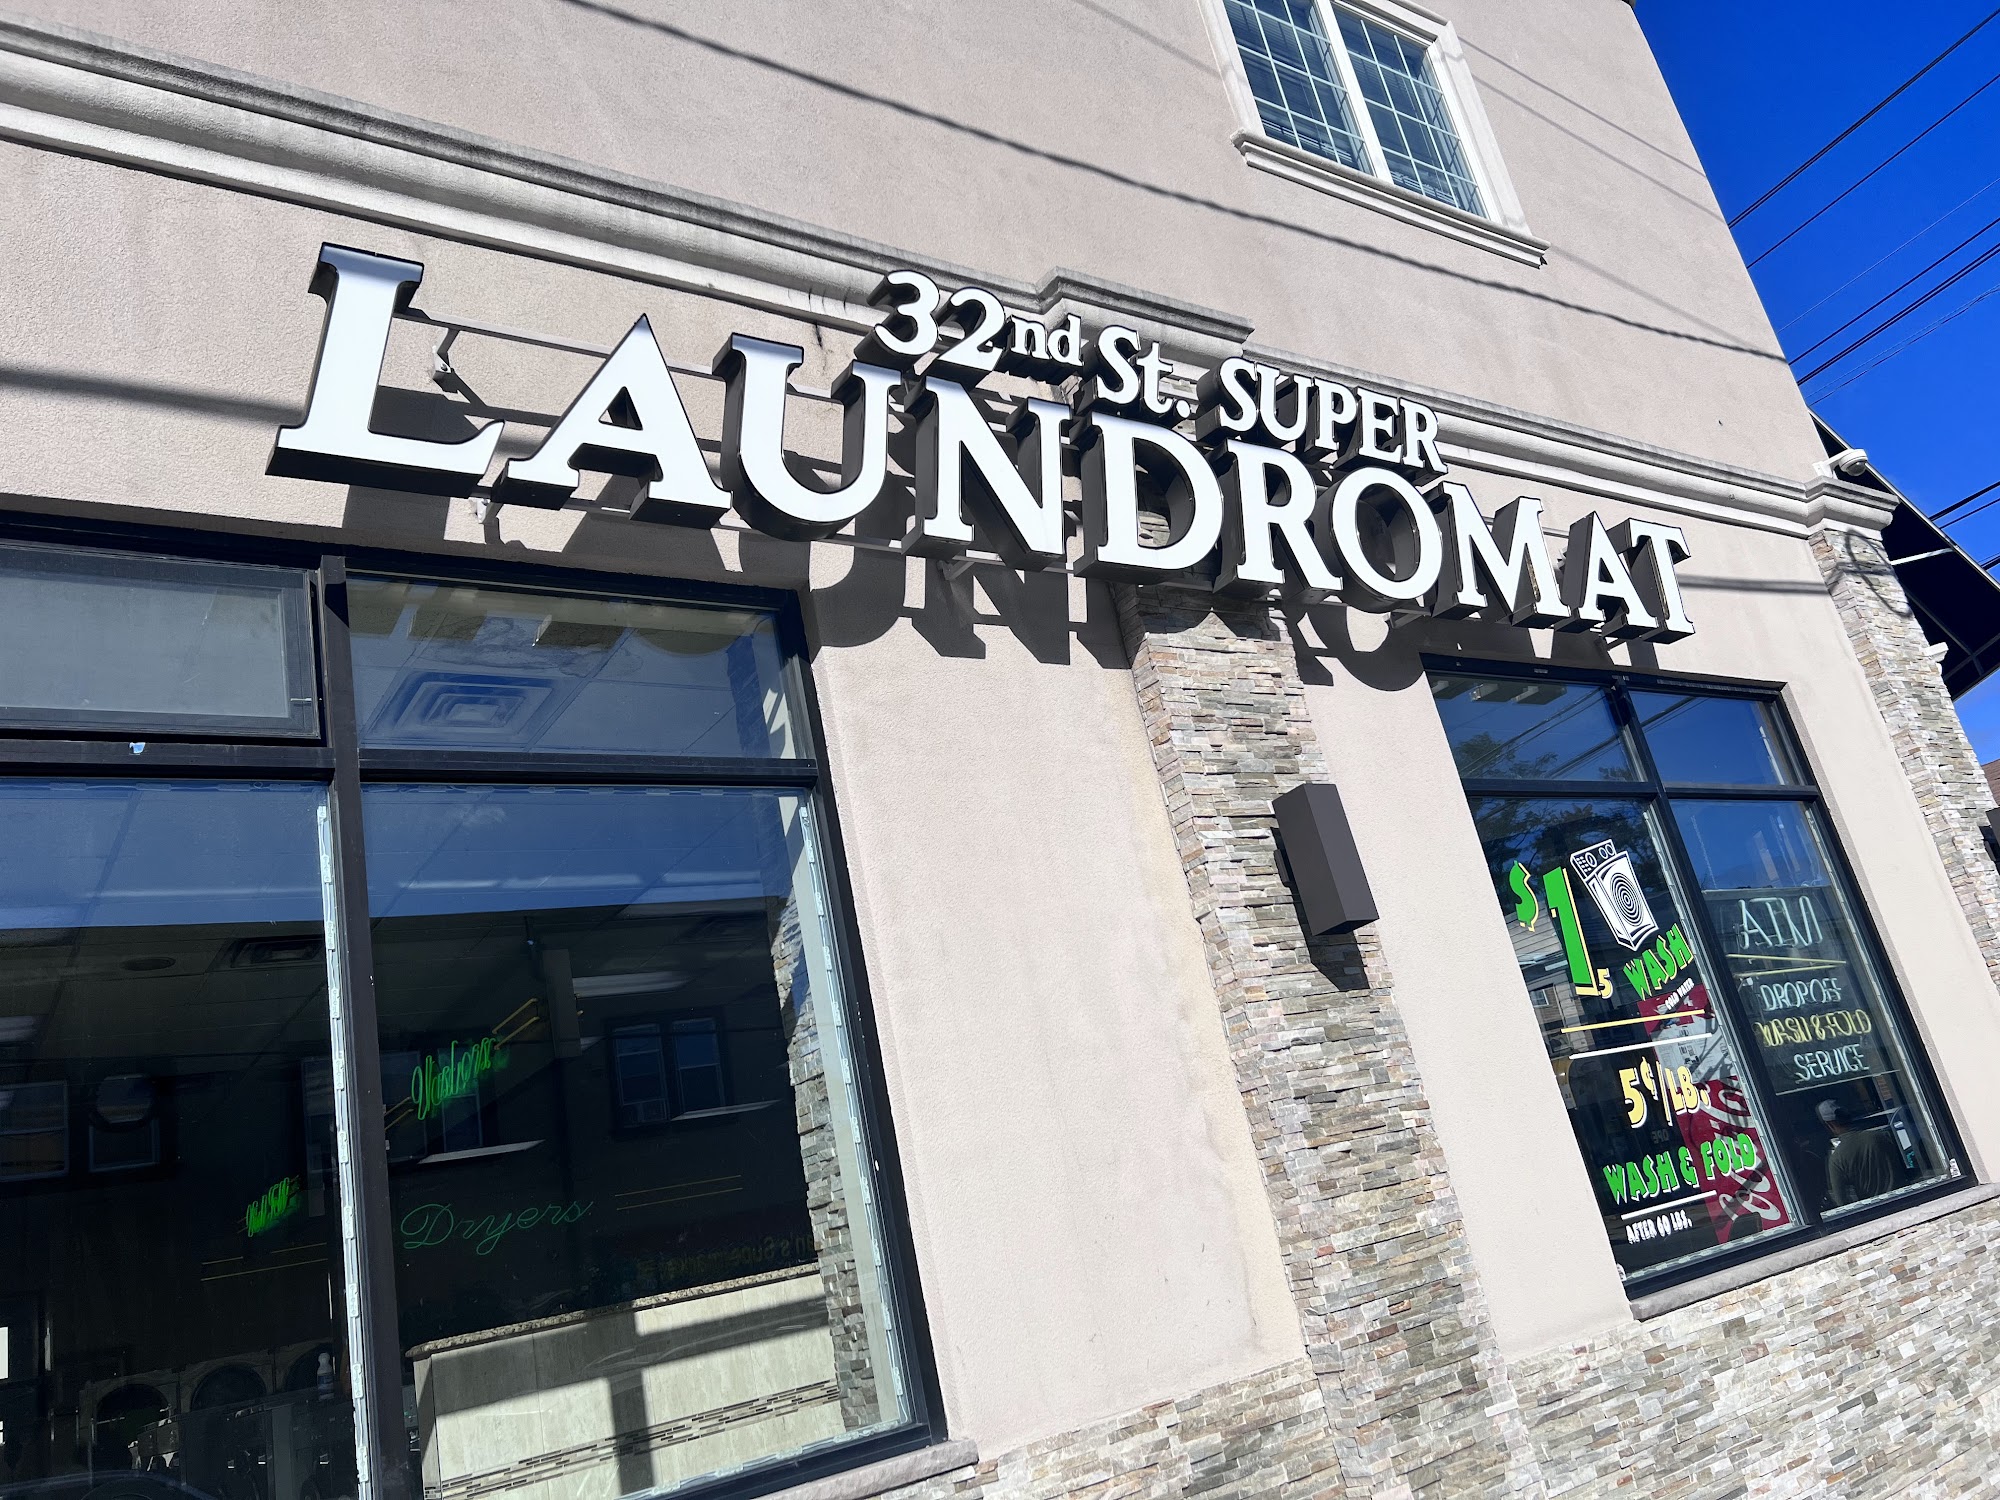 32nd Street Laundromat